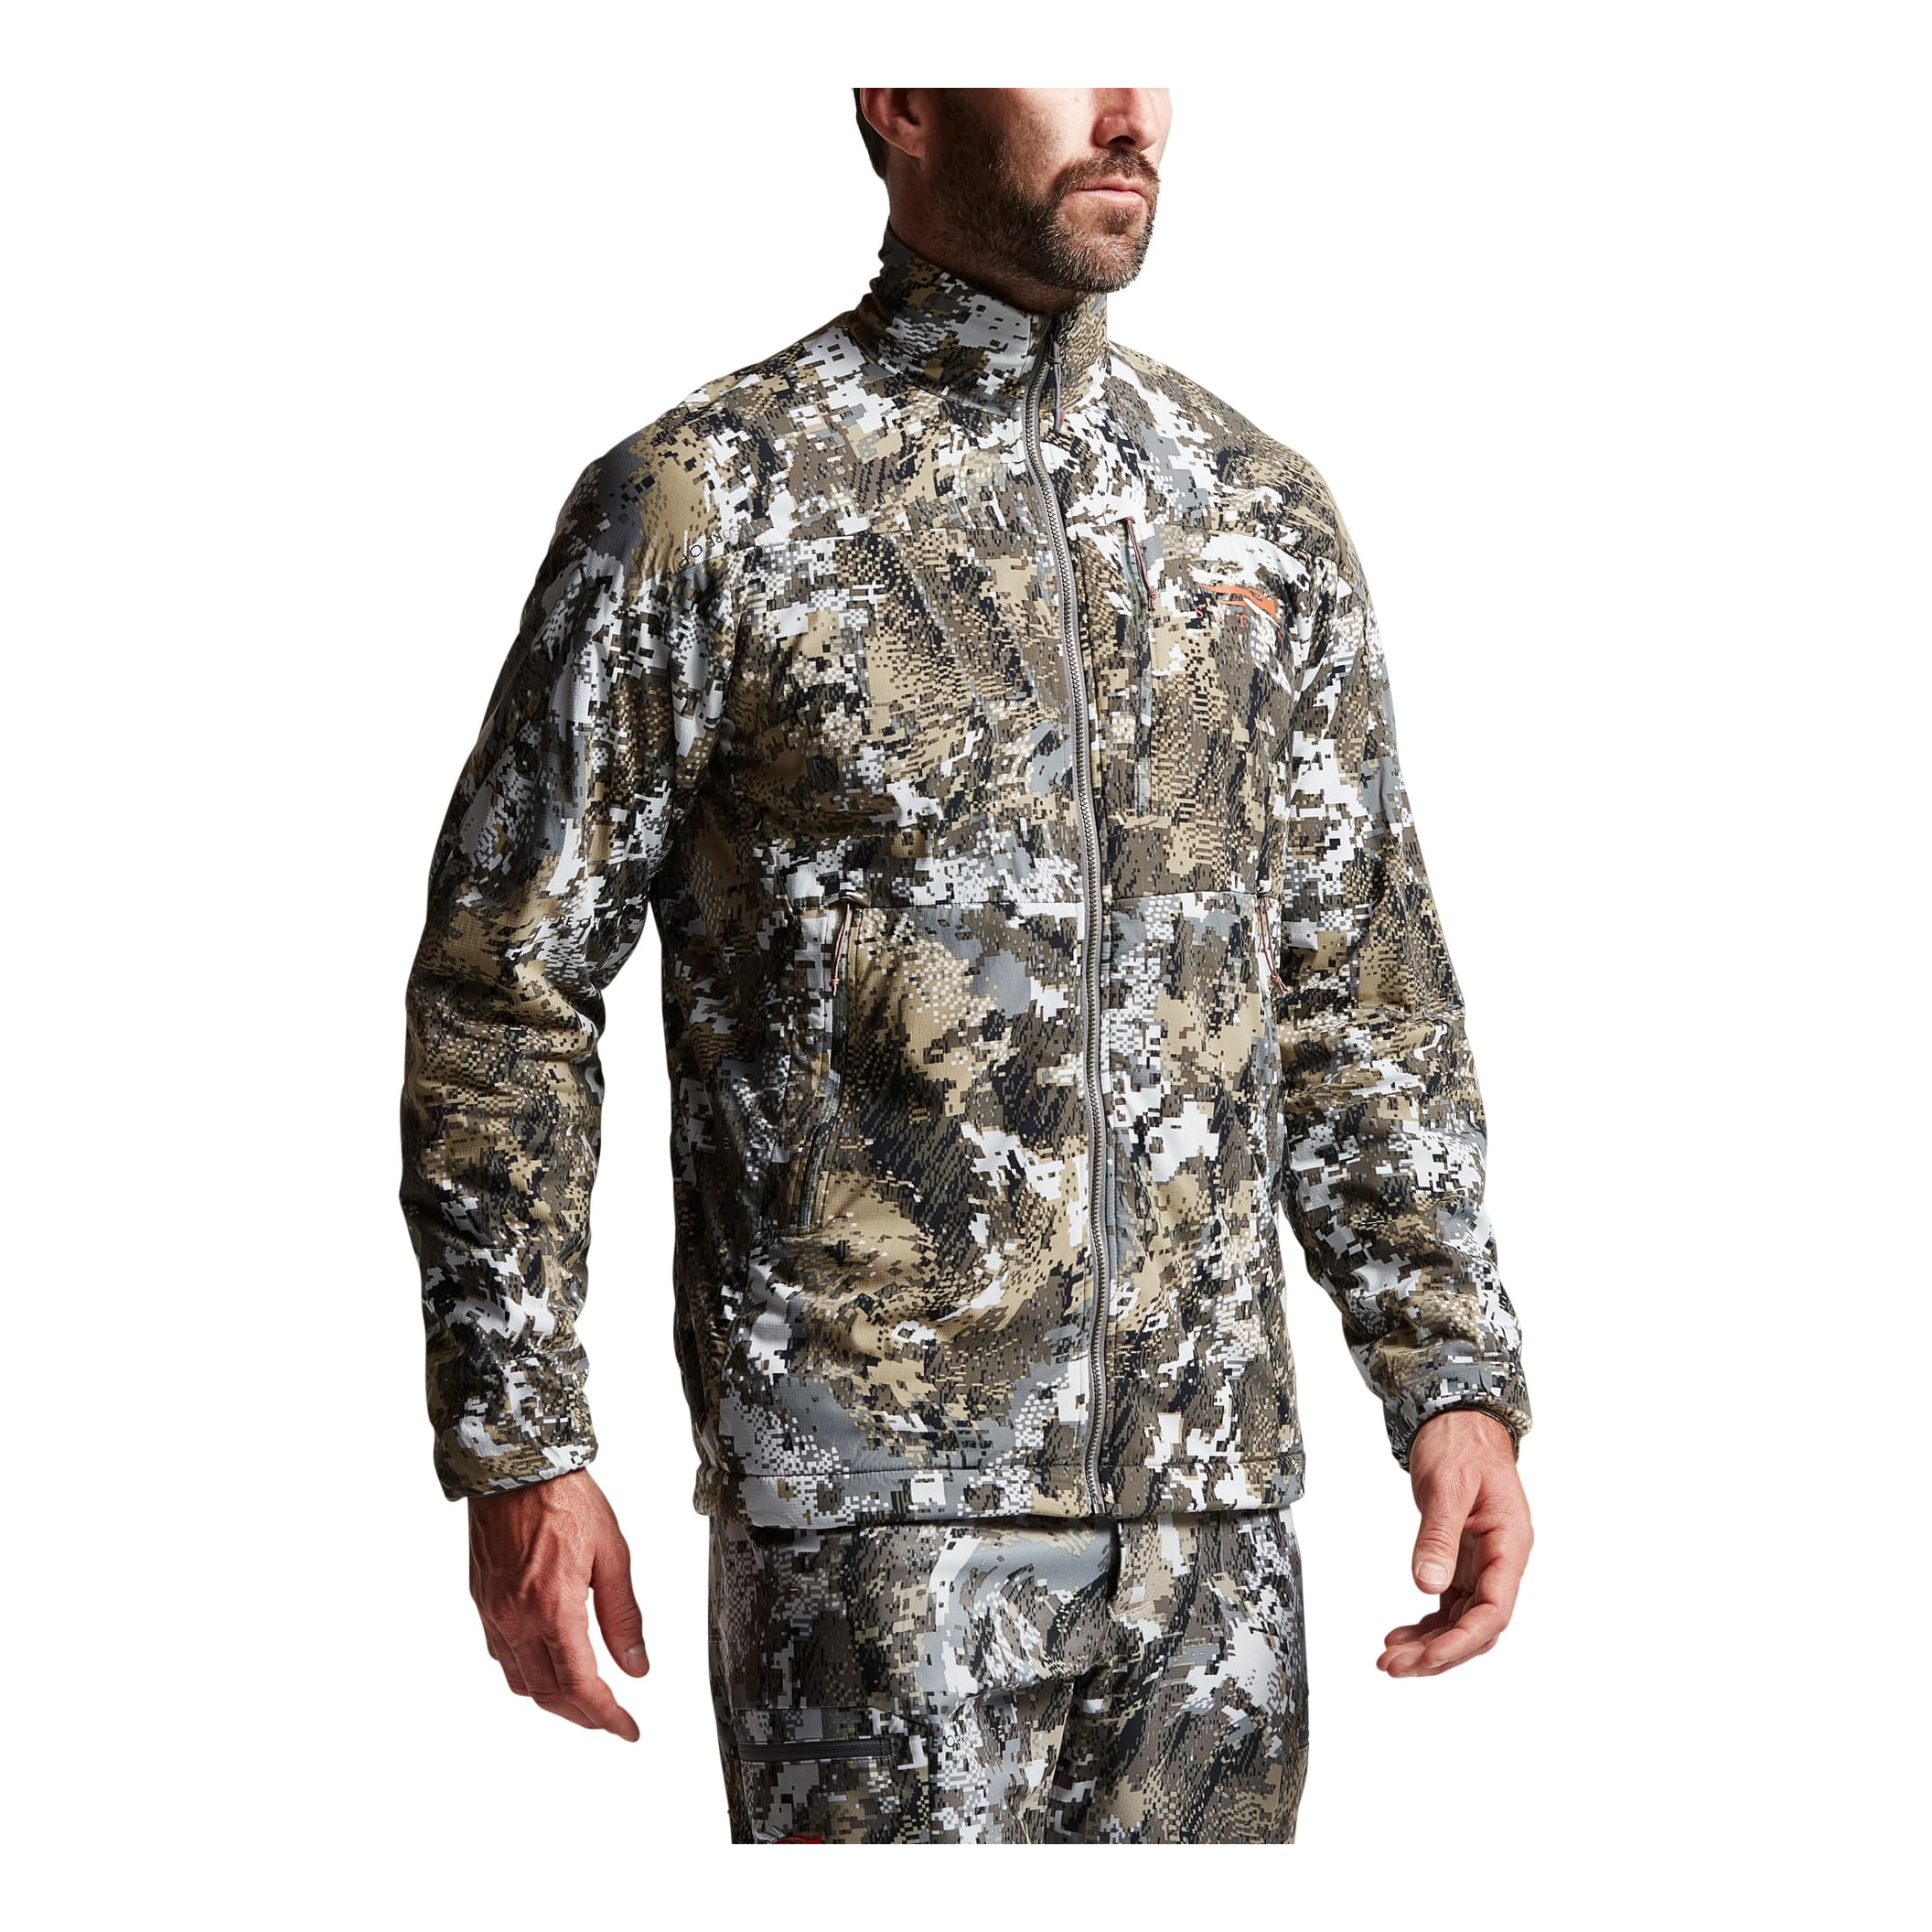 ,Sitka® Men’s GORE OPTIFADE Concealment Series Ambient Jacket - Elevated II